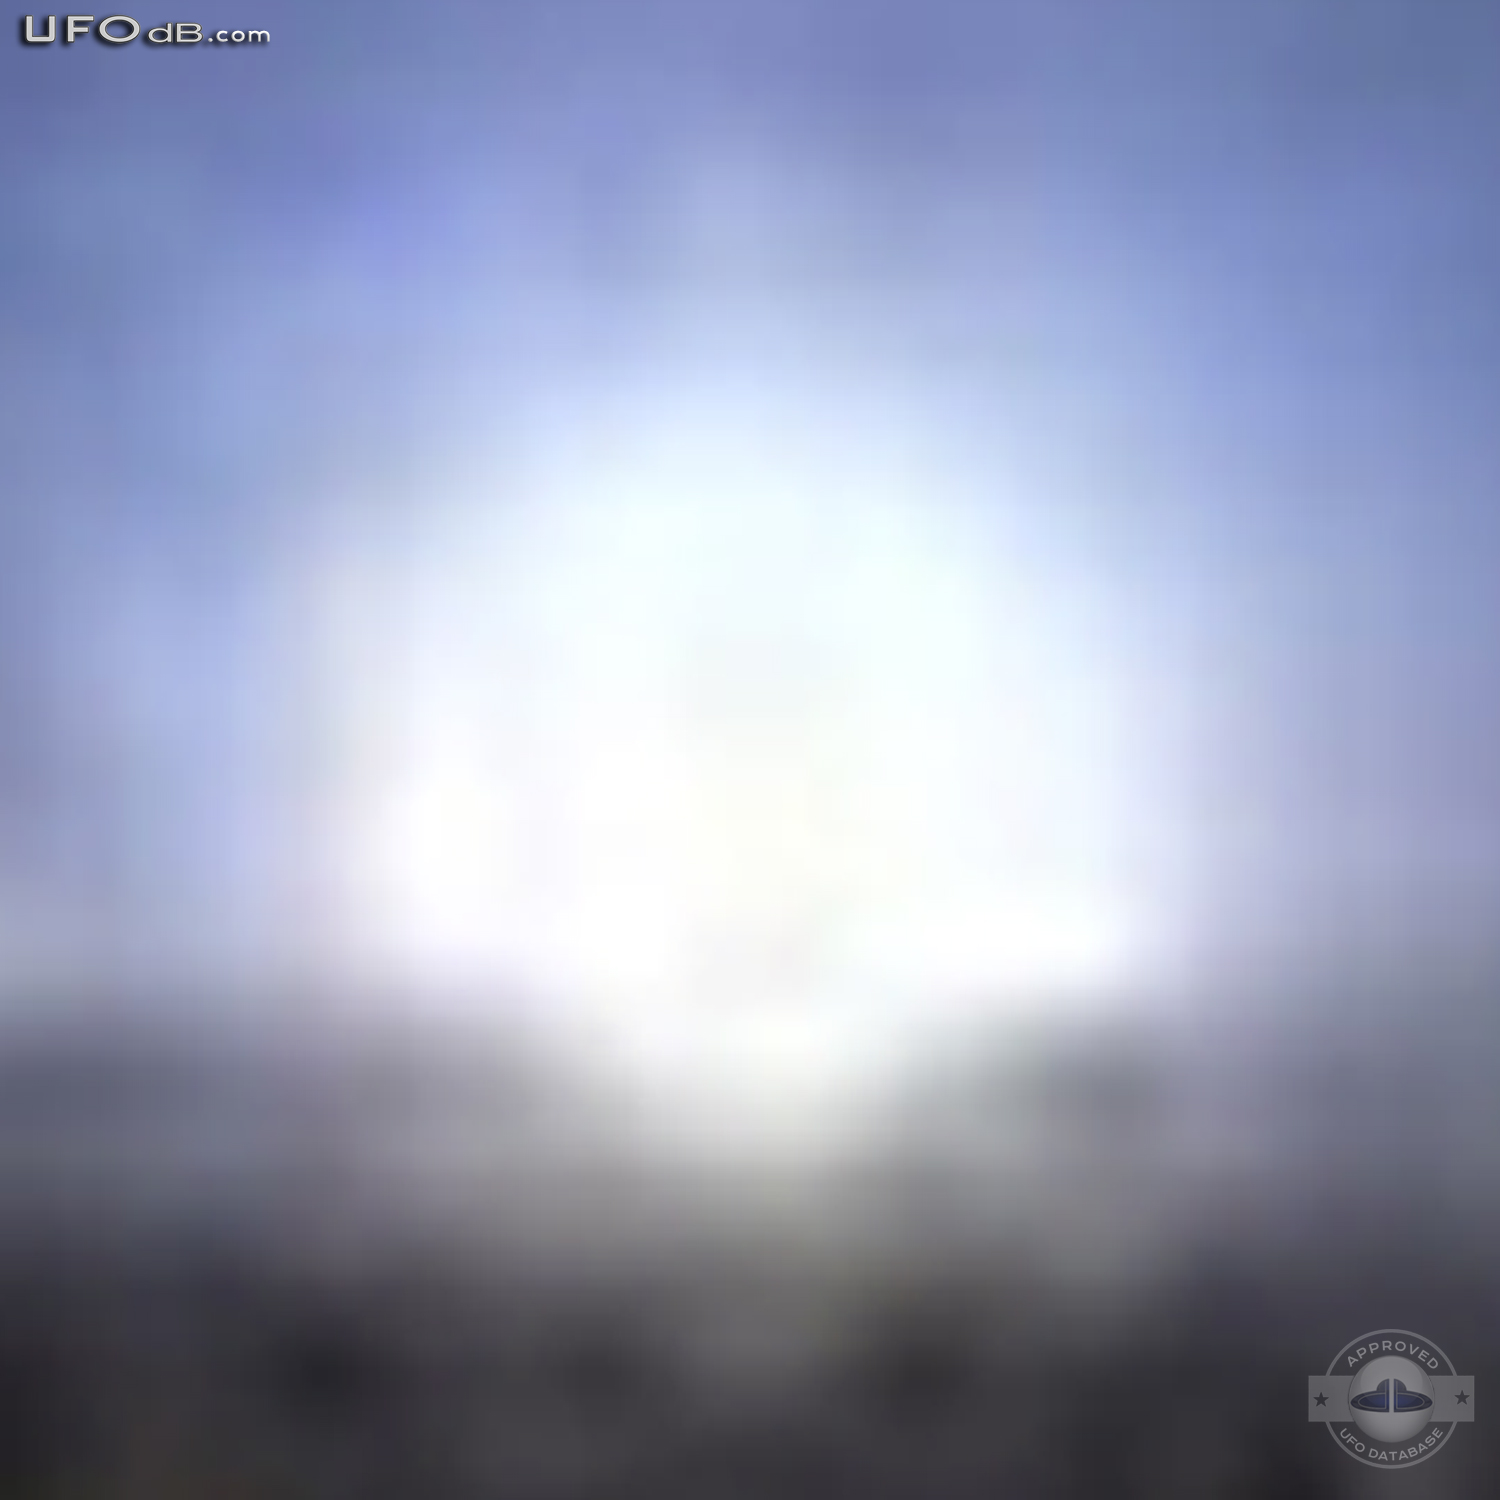 NHK TV News show earthquake strange UFO light | Japan | April 7 2011 UFO Picture #293-6